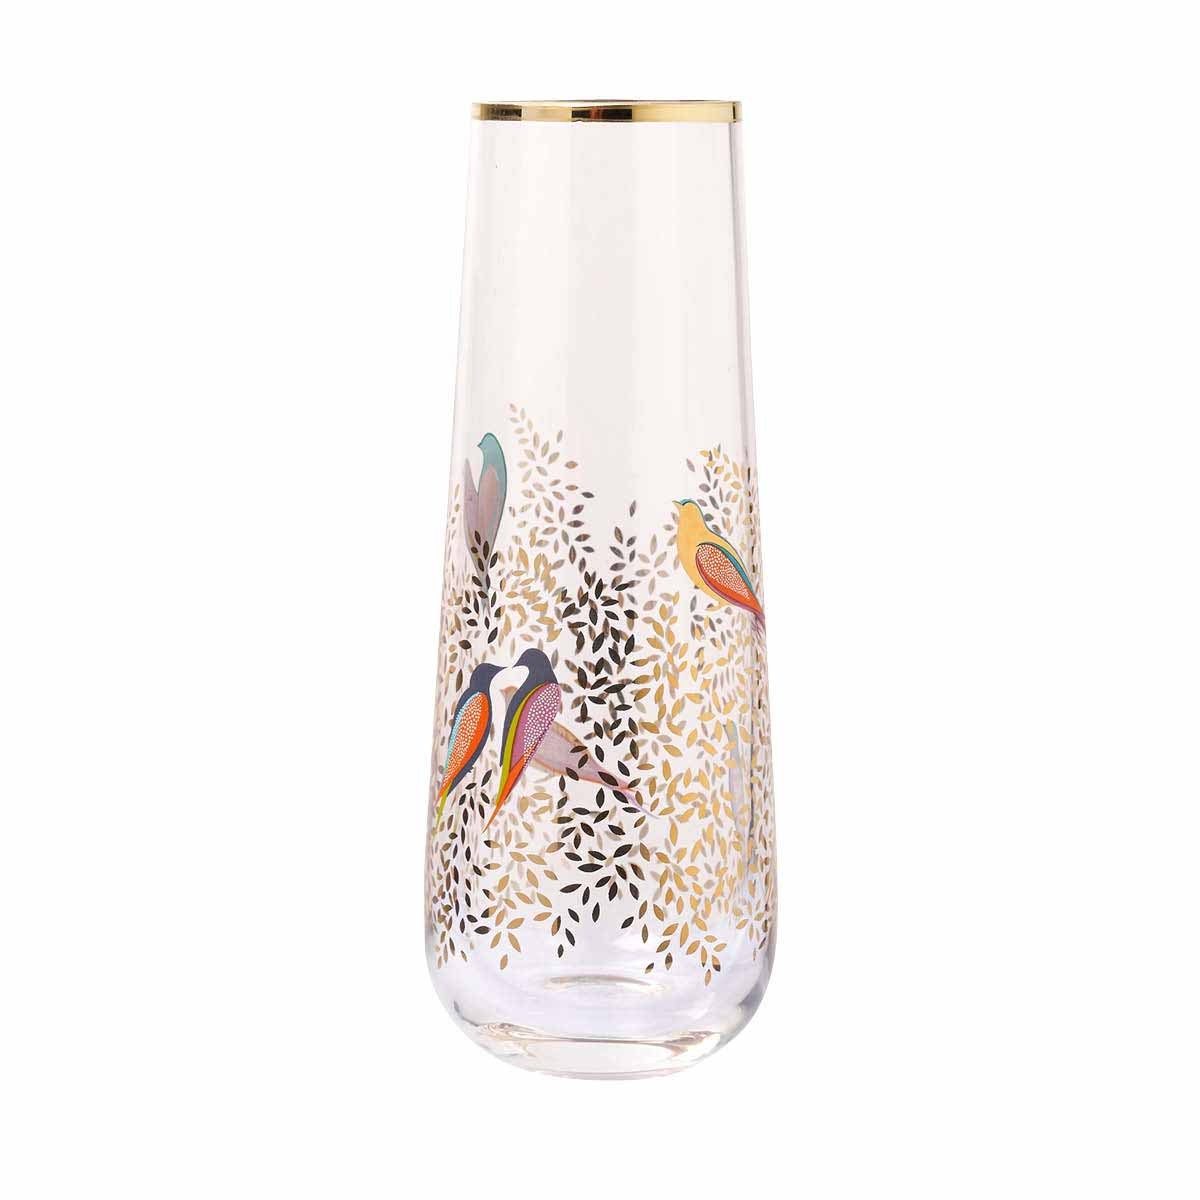 Sara Miller London Chelsea Glass Single Stem Vase - 15.8 cm